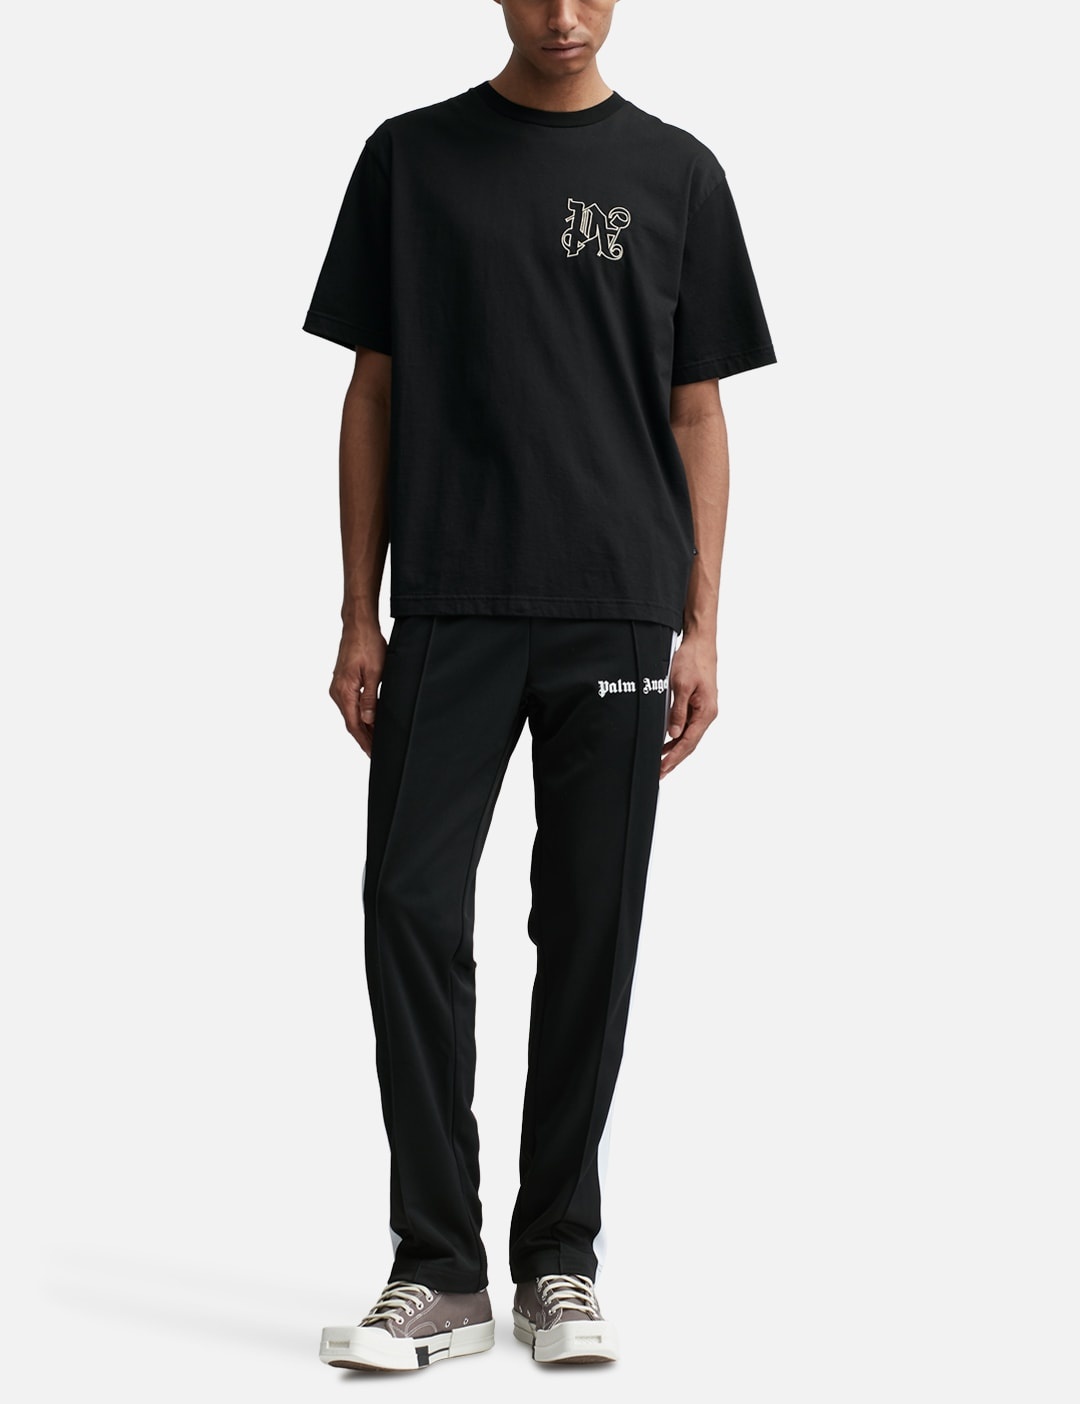 Monogram Regular T-Shirt in black - Palm Angels® Official